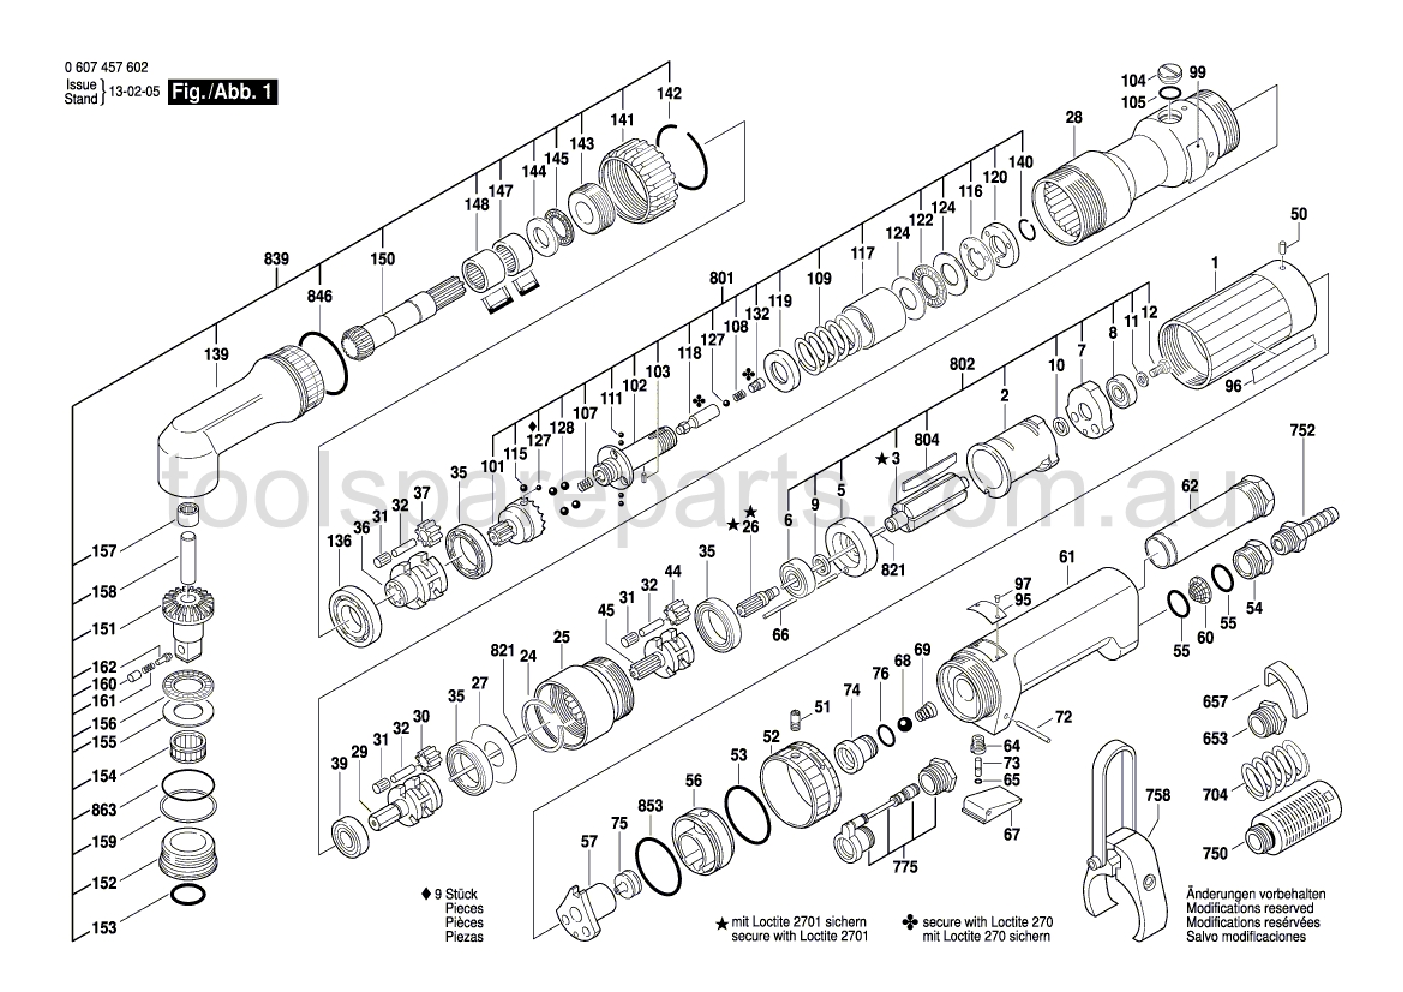 Bosch 740 WATT-SERIE 0607457602  Diagram 1